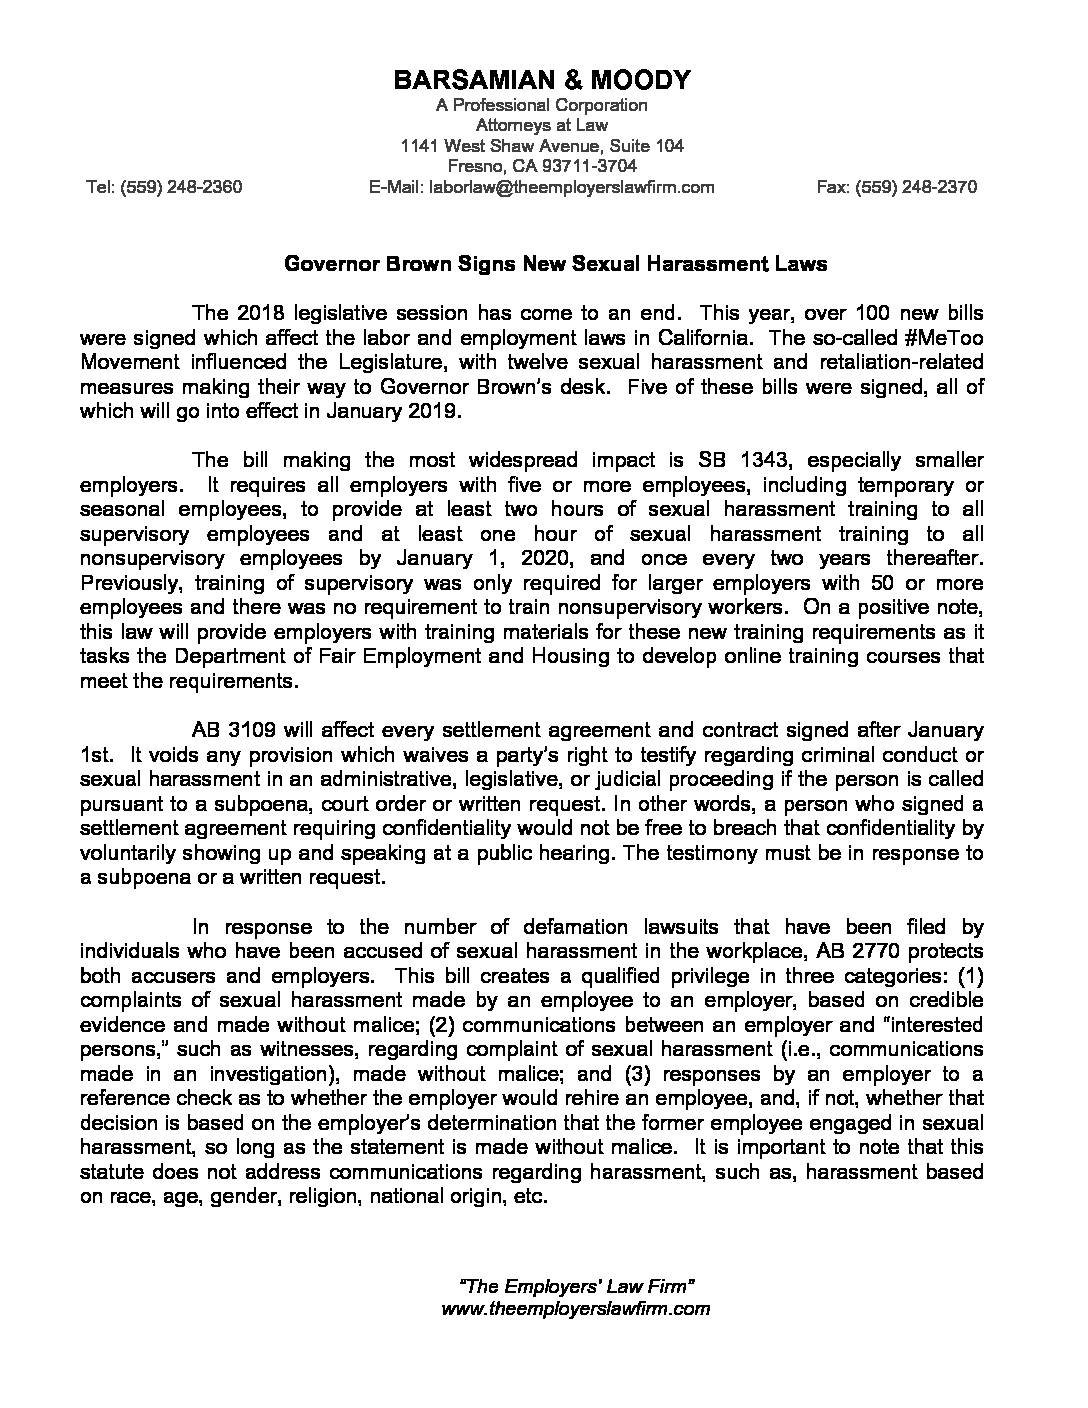 New_Sexual_Harassment_Laws10-2-18-pdf.jpg